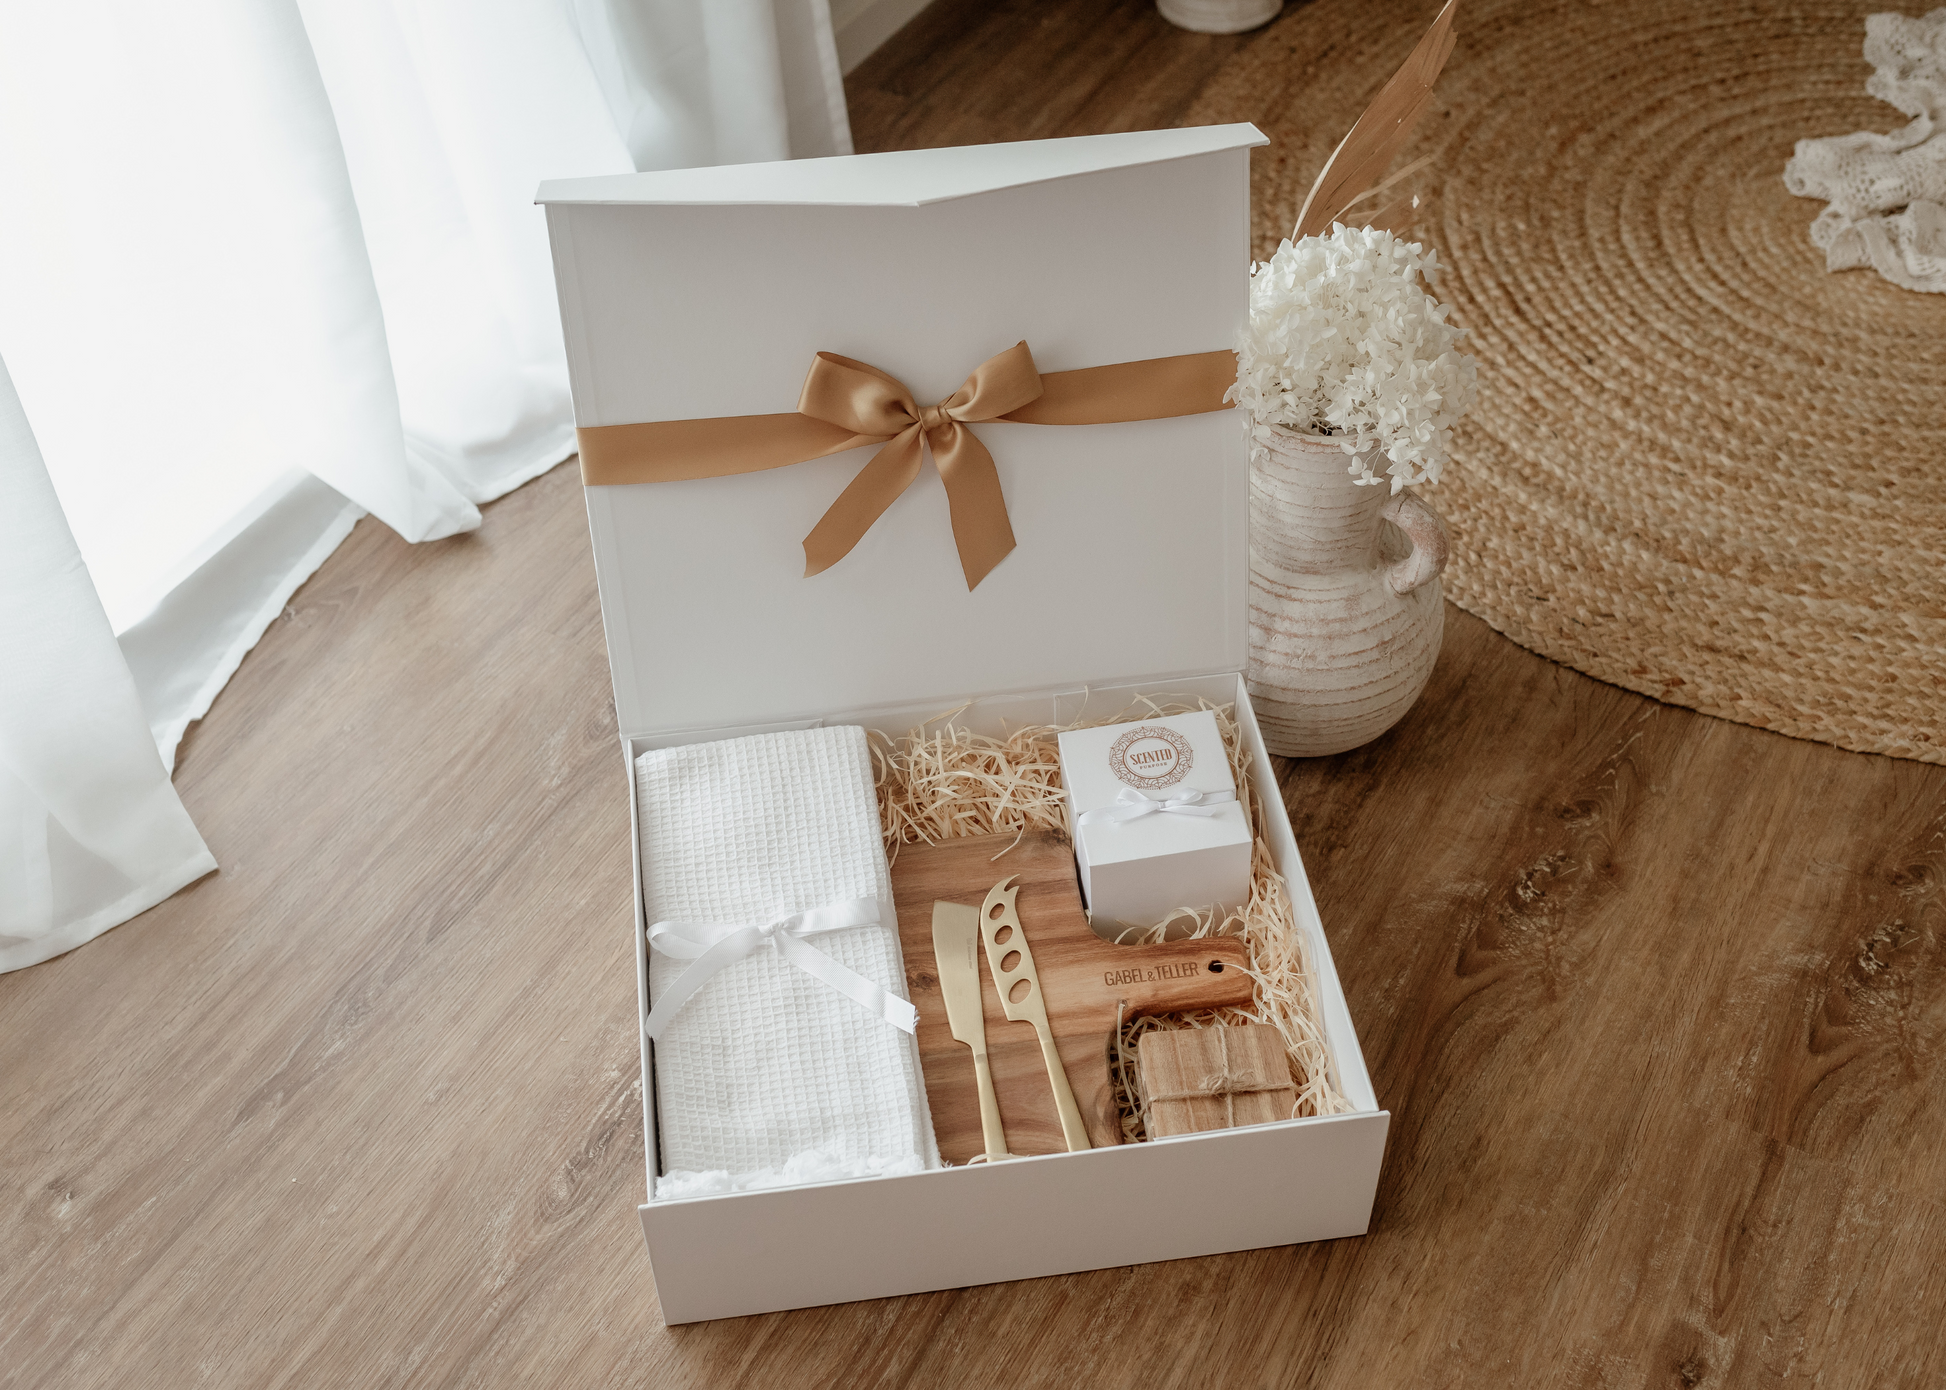 The Home Indulgence Gift Box – Welcome Home Box